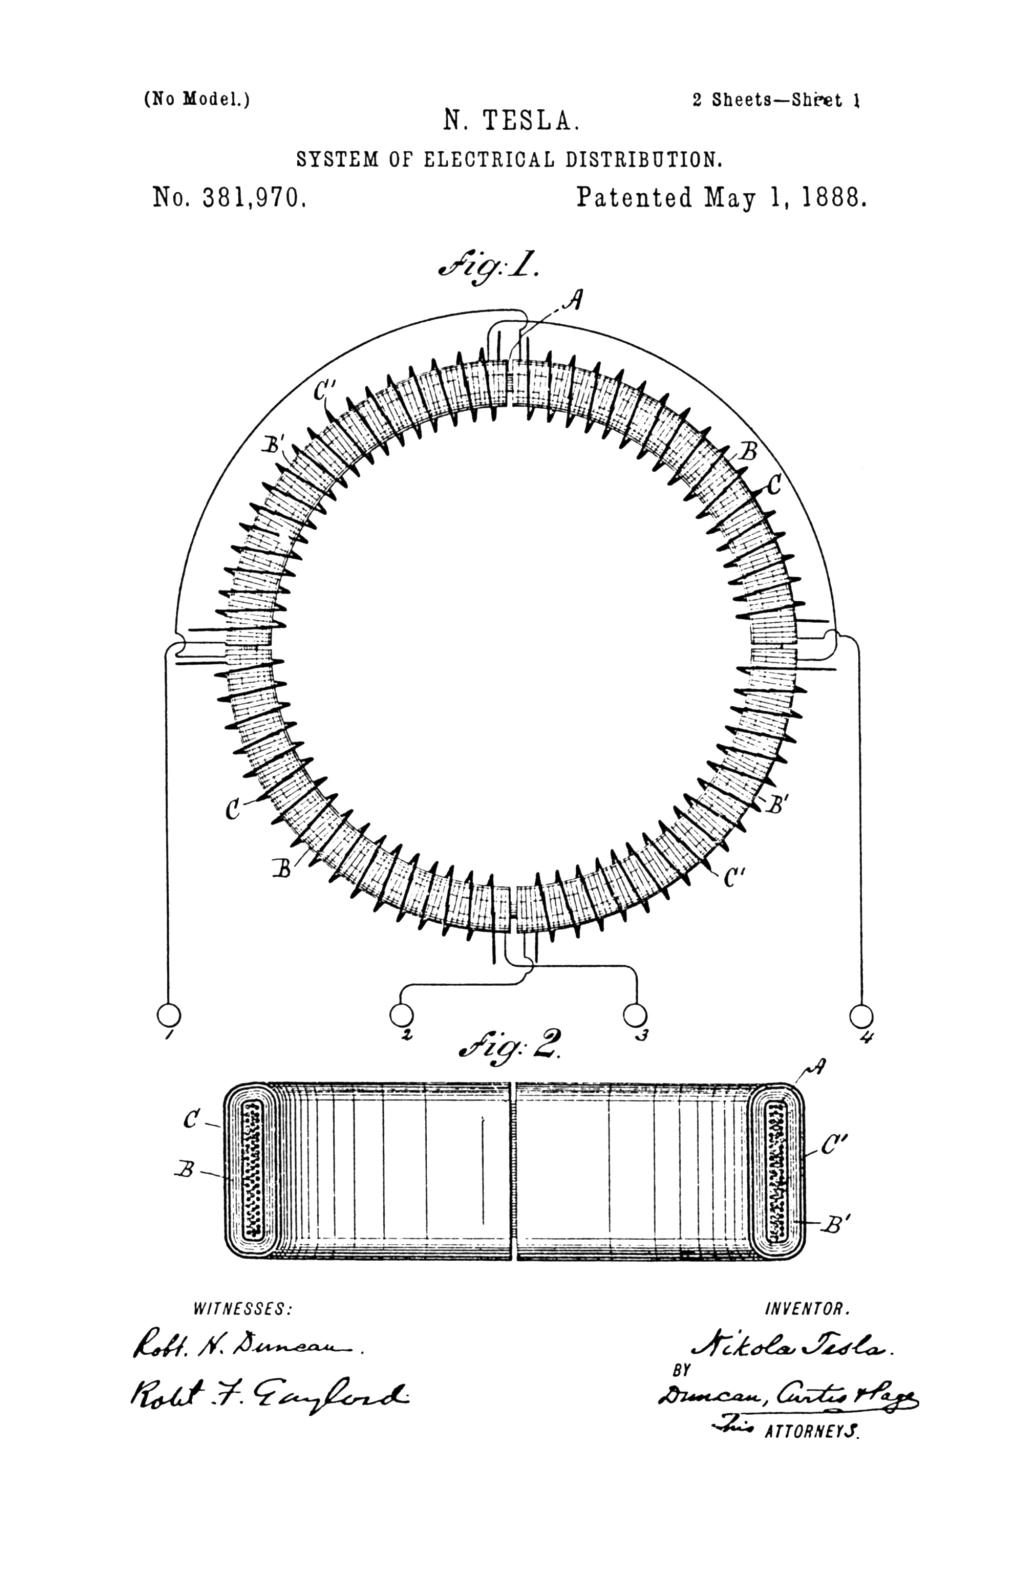 Nikola Tesla U.S. Patent 381,970 - System of Electrical Distribution - Image 1